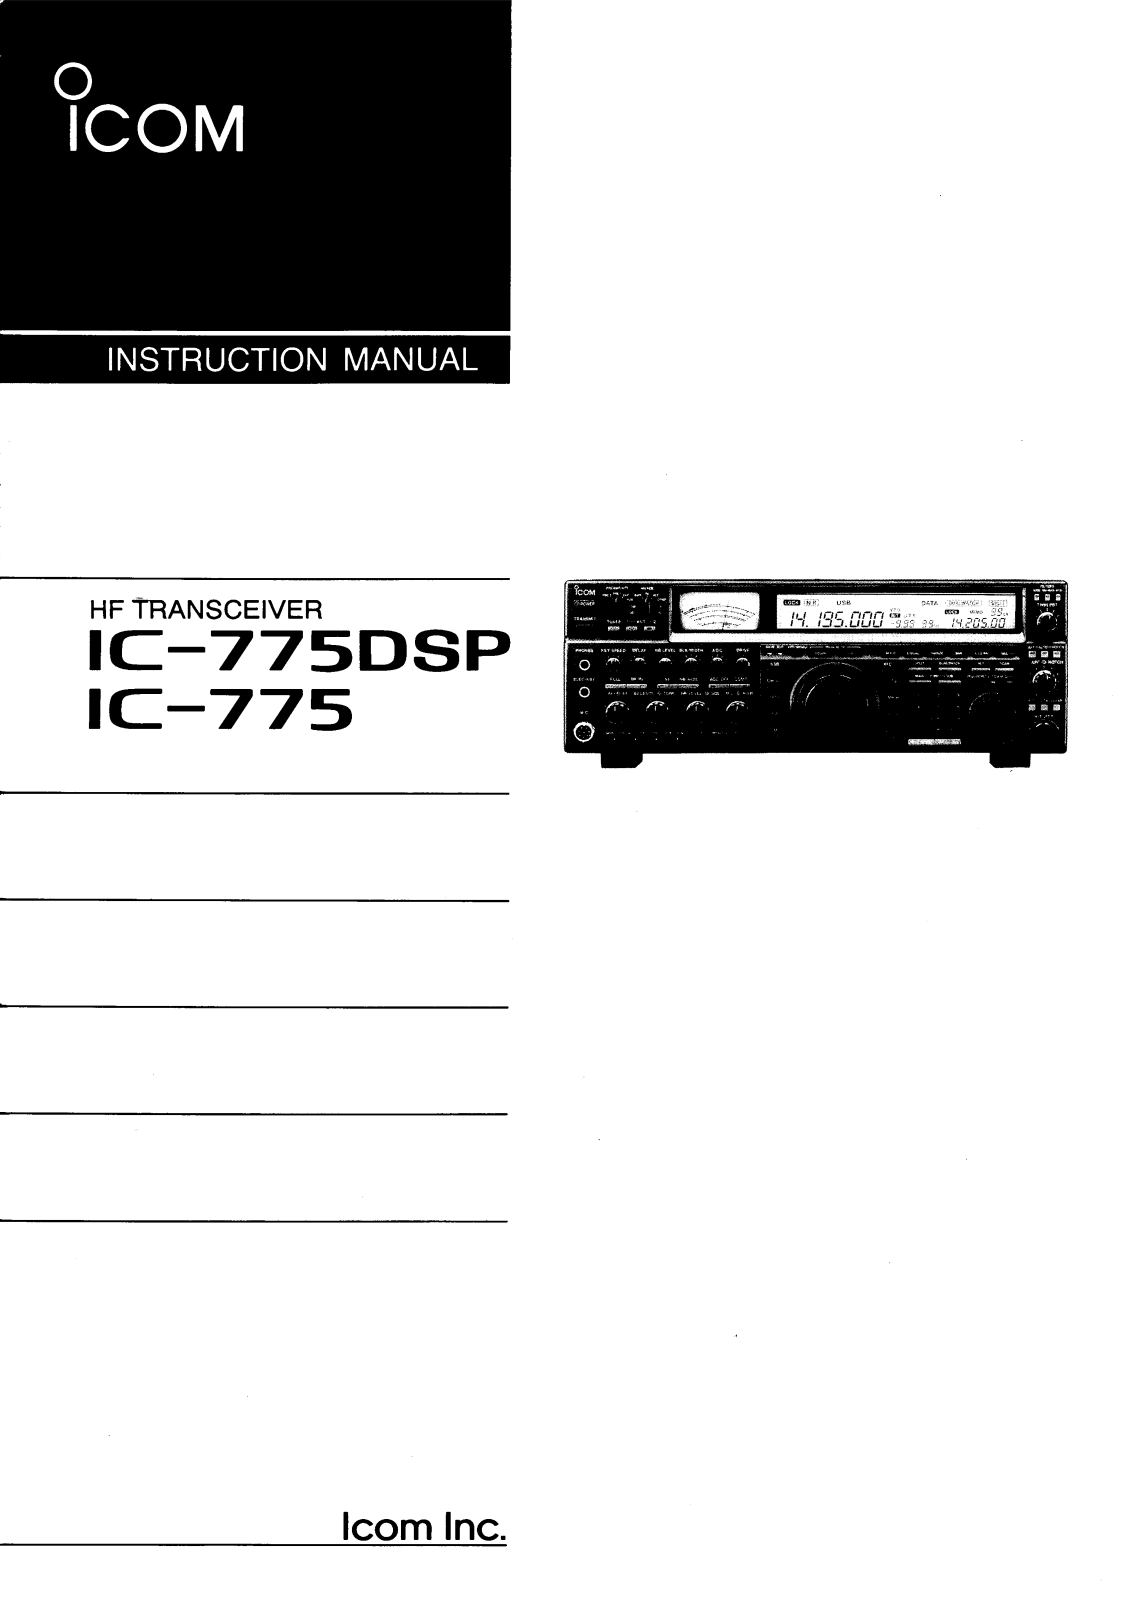 Icom IC-775, IC-775DSP User Manual